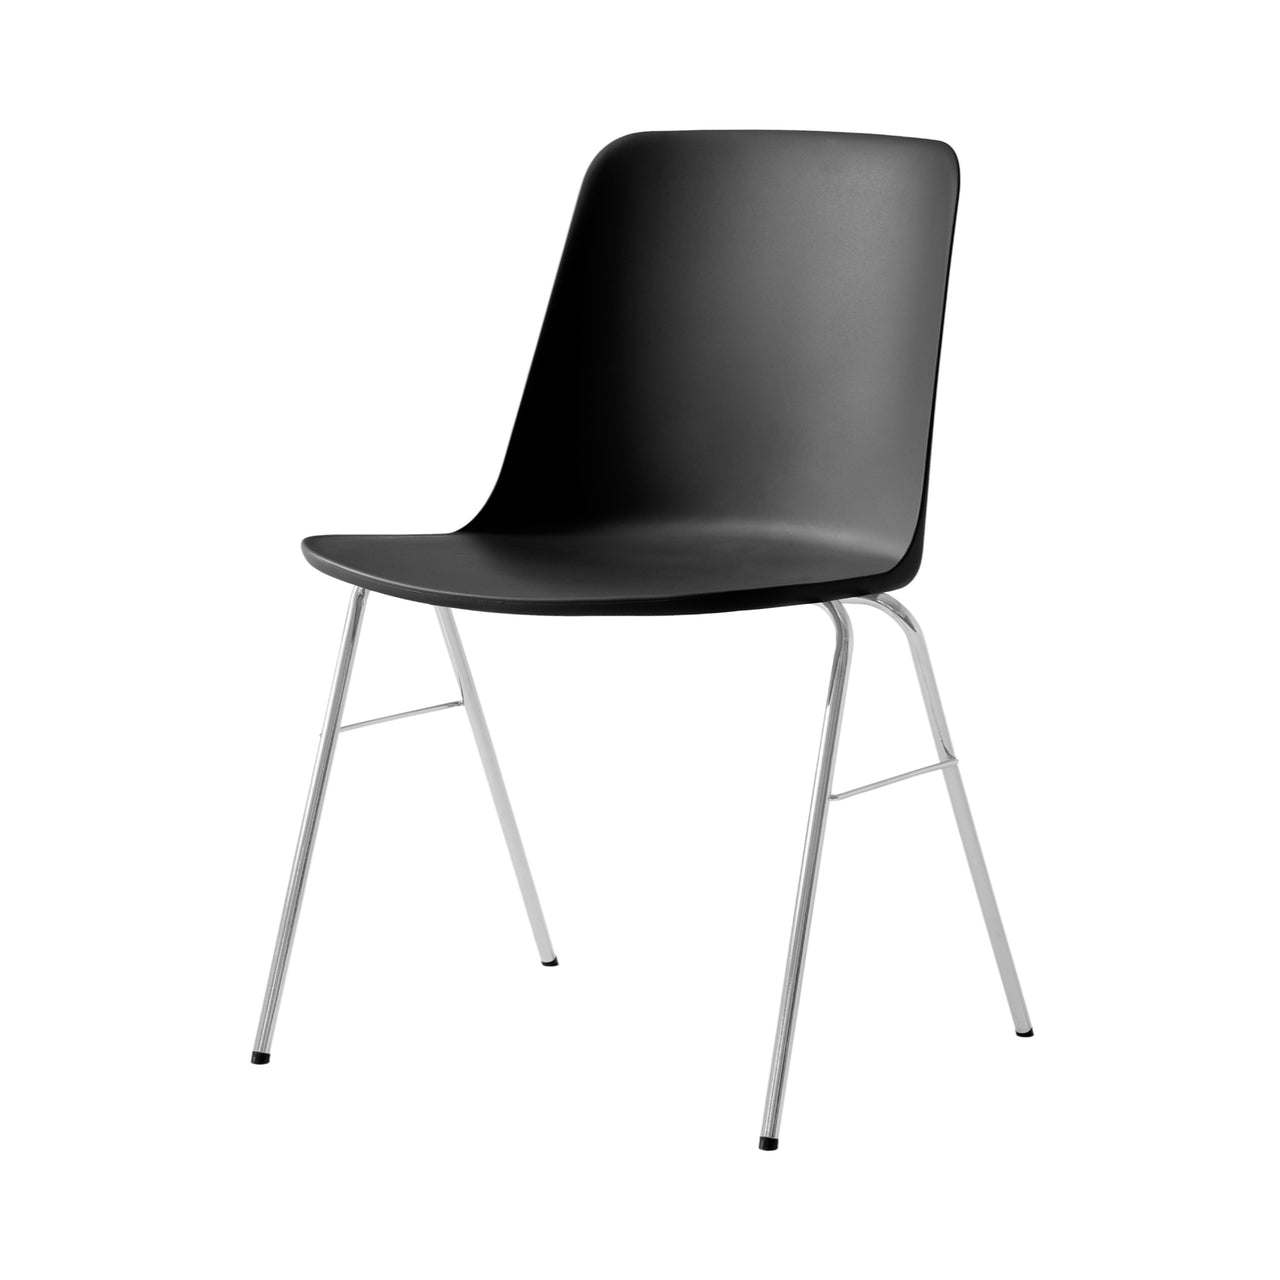 Rely Chair HW26: Black + Chrome